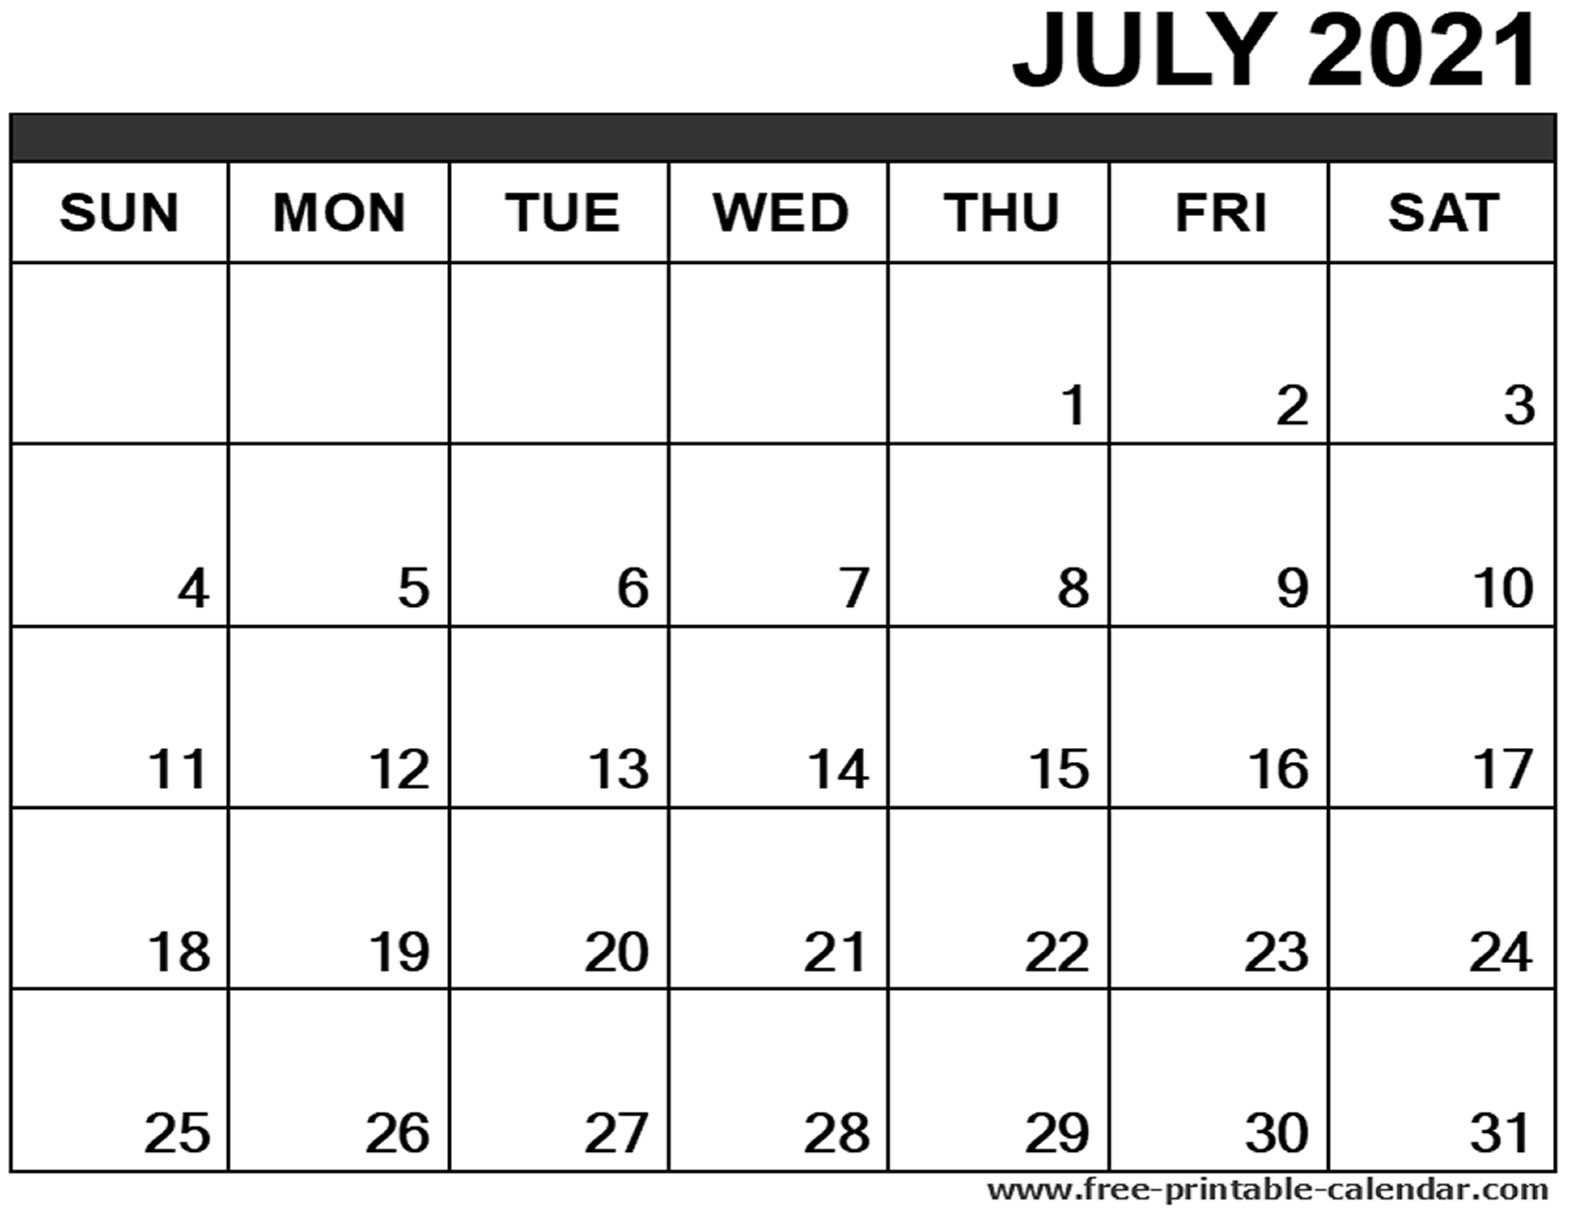 July 2021 Calendar Printable - Free-Printable-Calendar Blank July 2021 Calendar Printable